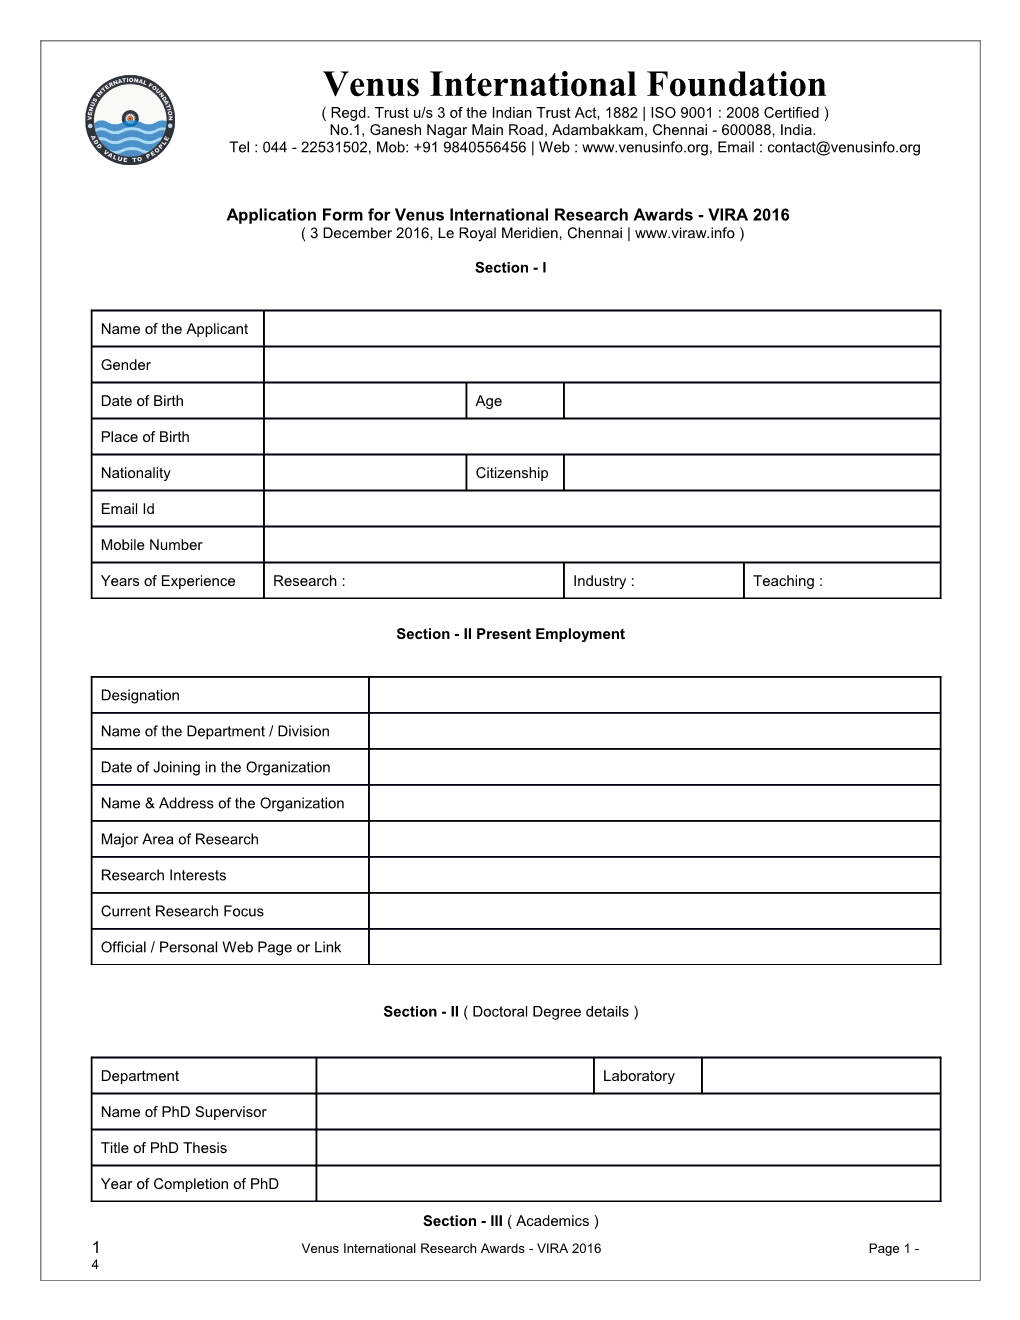 Application Form for Venus International Research Awards - VIRA 2016